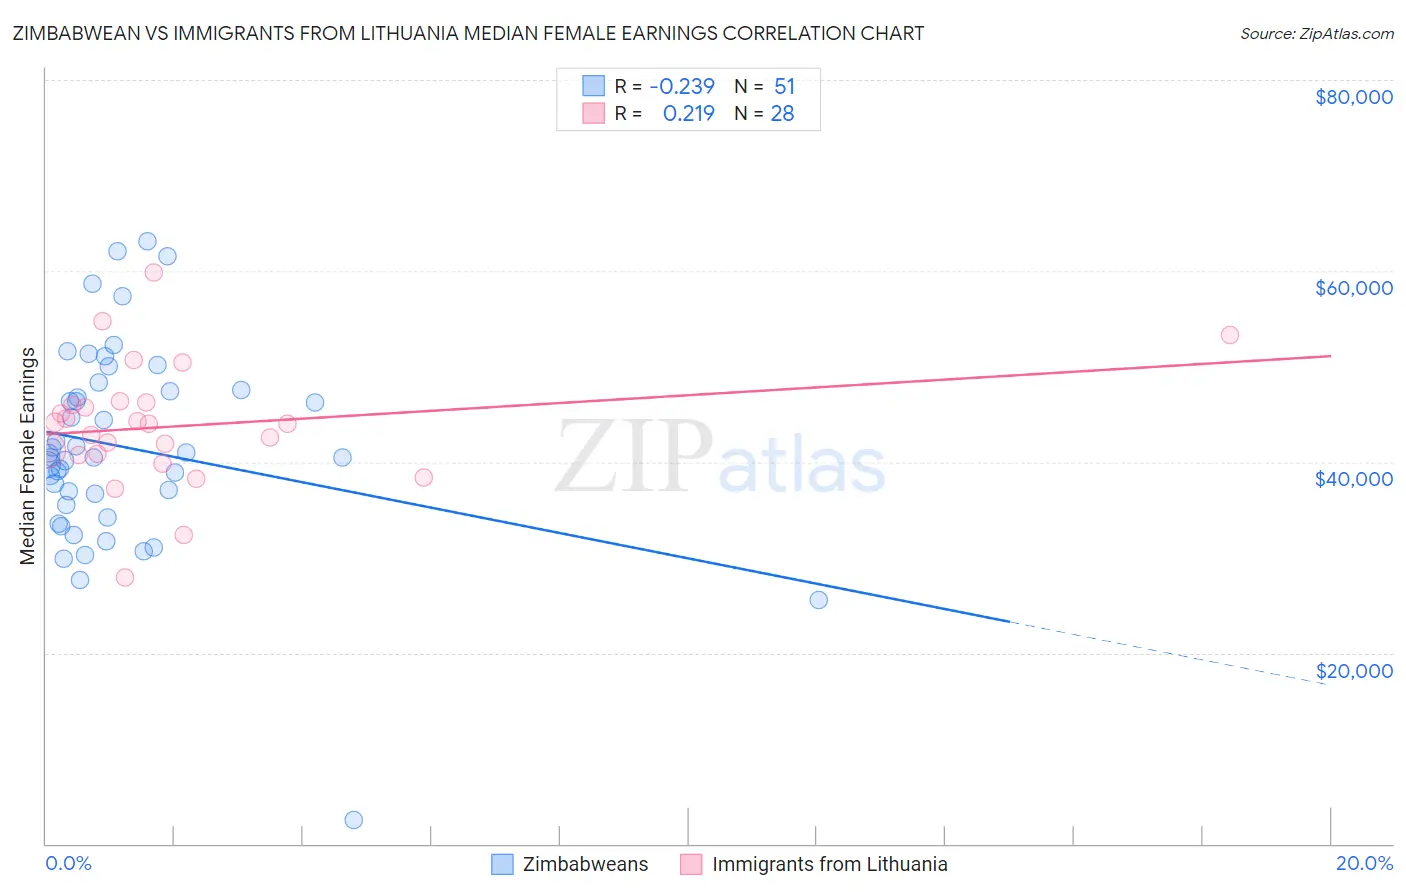 Zimbabwean vs Immigrants from Lithuania Median Female Earnings